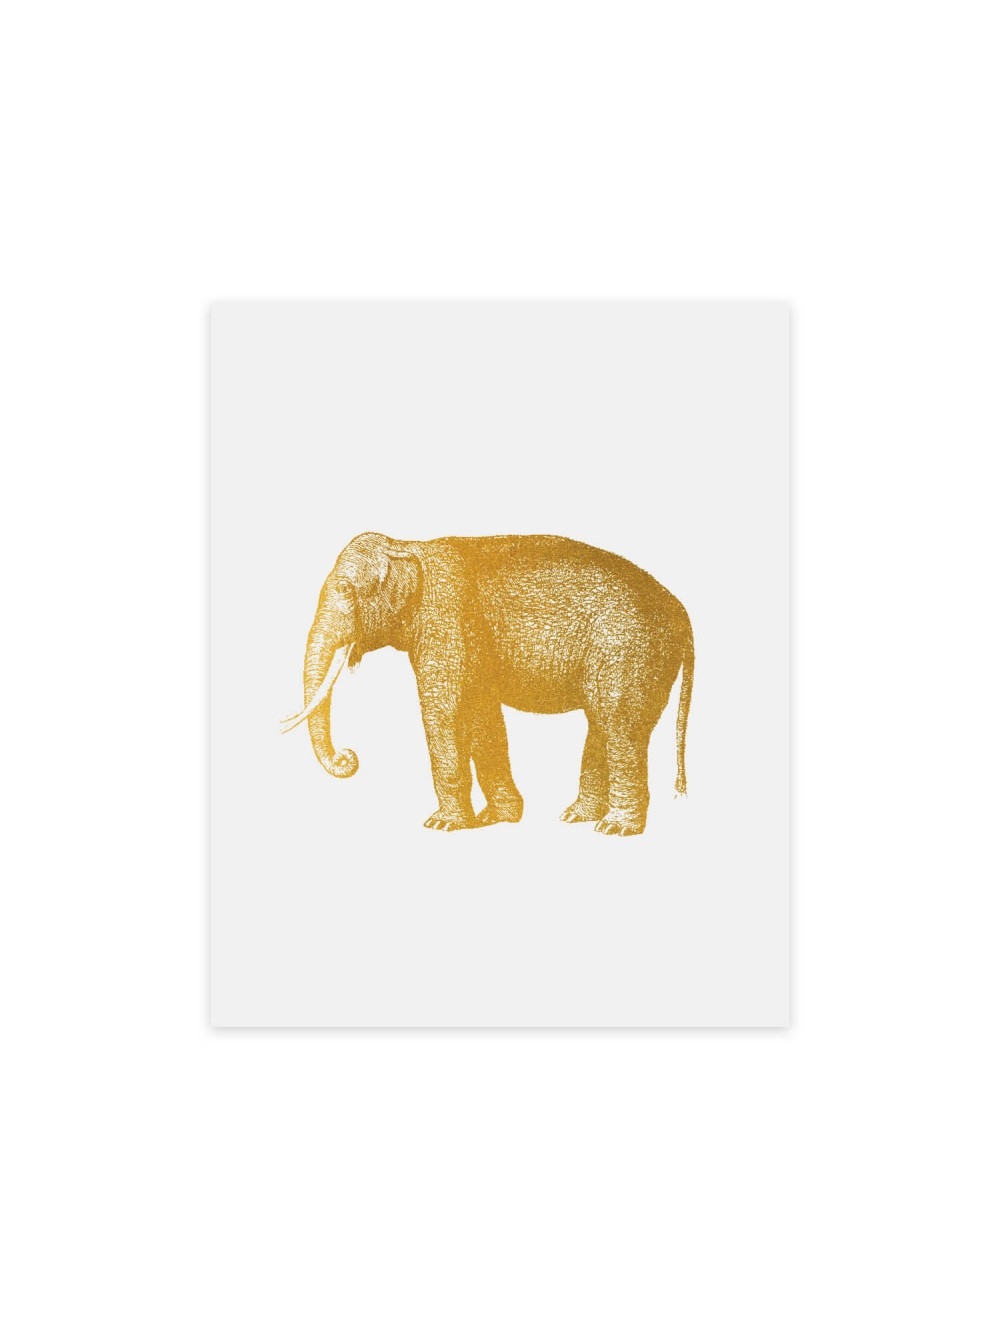 GOLDEN ELEPHANT PRINT - Unframed - Image 0